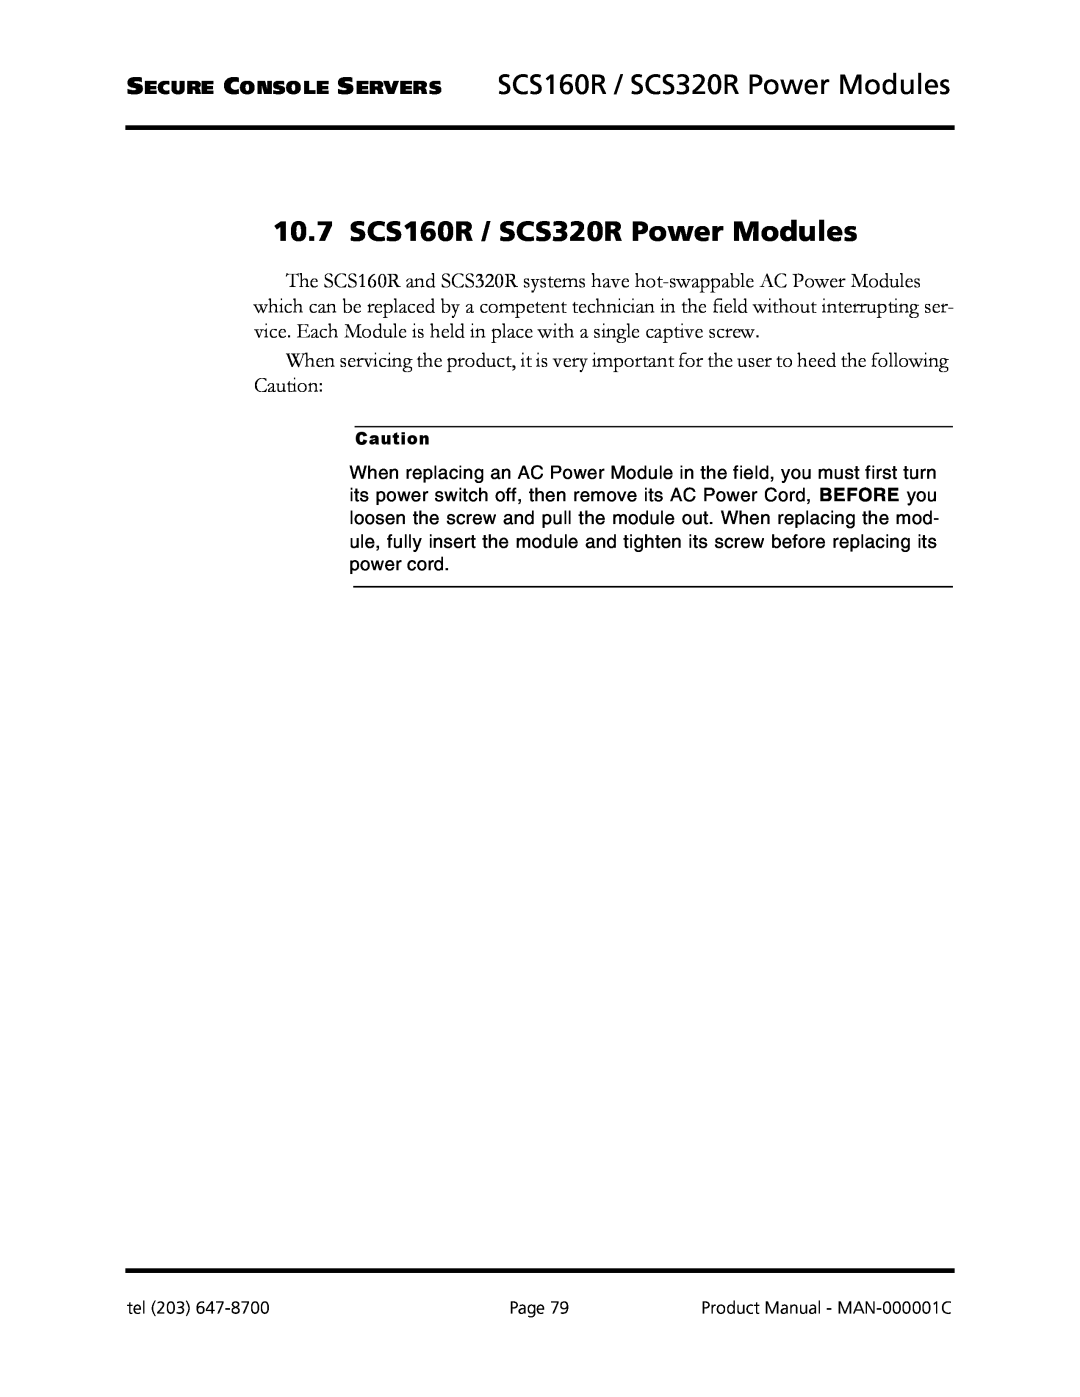 Logical Solutions SCS-R 10.7 SCS160R / SCS320R Power Modules, SECURE CONSOLE SERVERS SCS160R / SCS320R Power Modules 